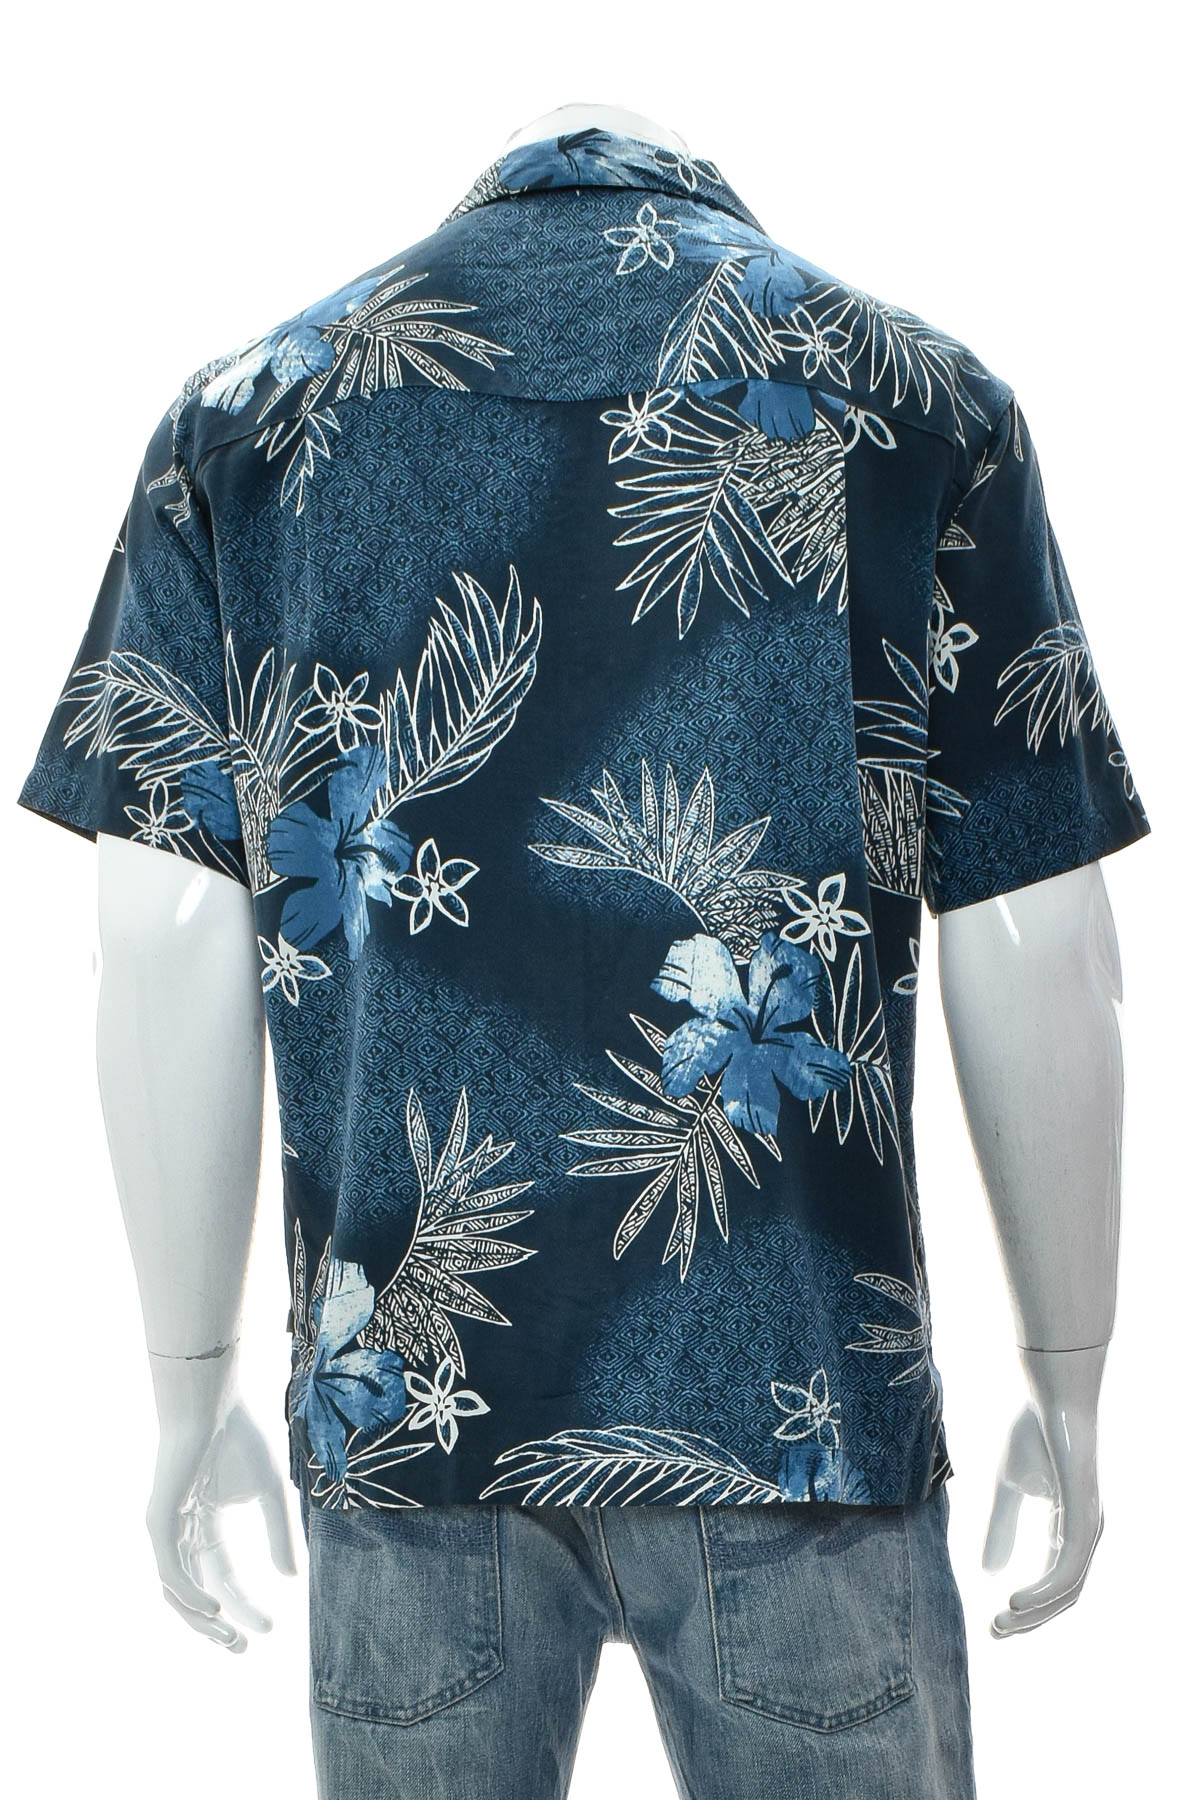 Men's shirt - Island Shores - 1